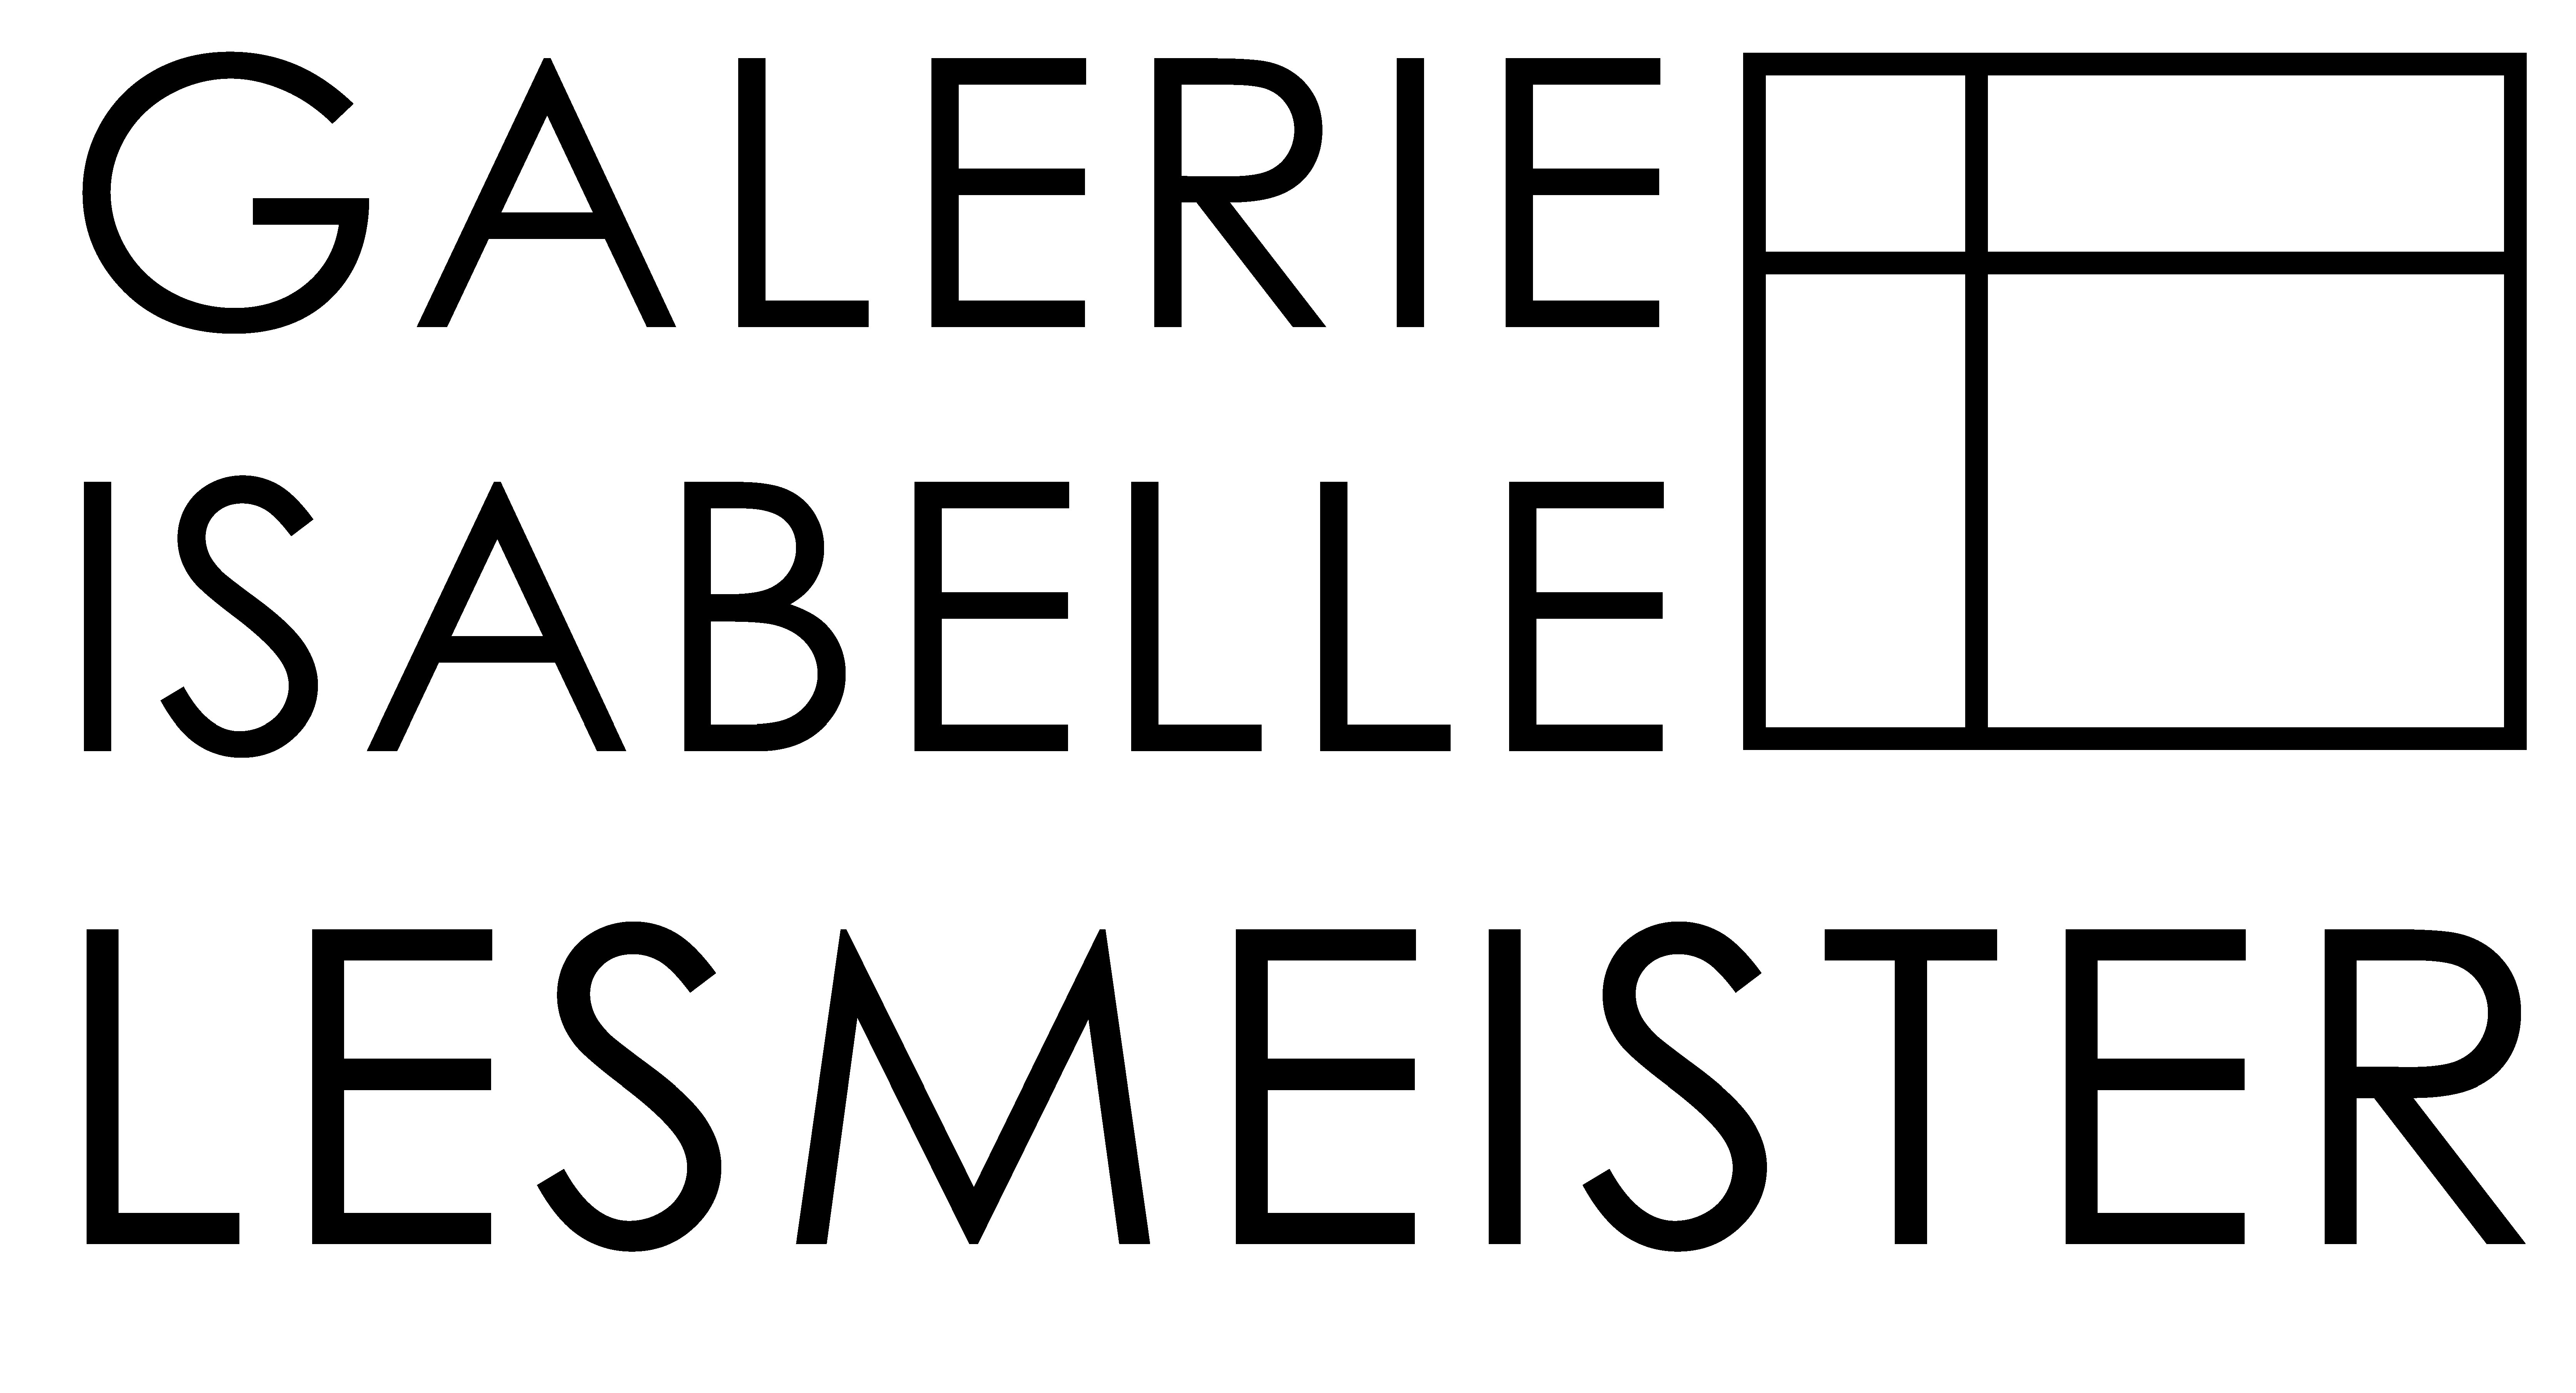 Galerie Isabelle Lesmeister | Regensburg